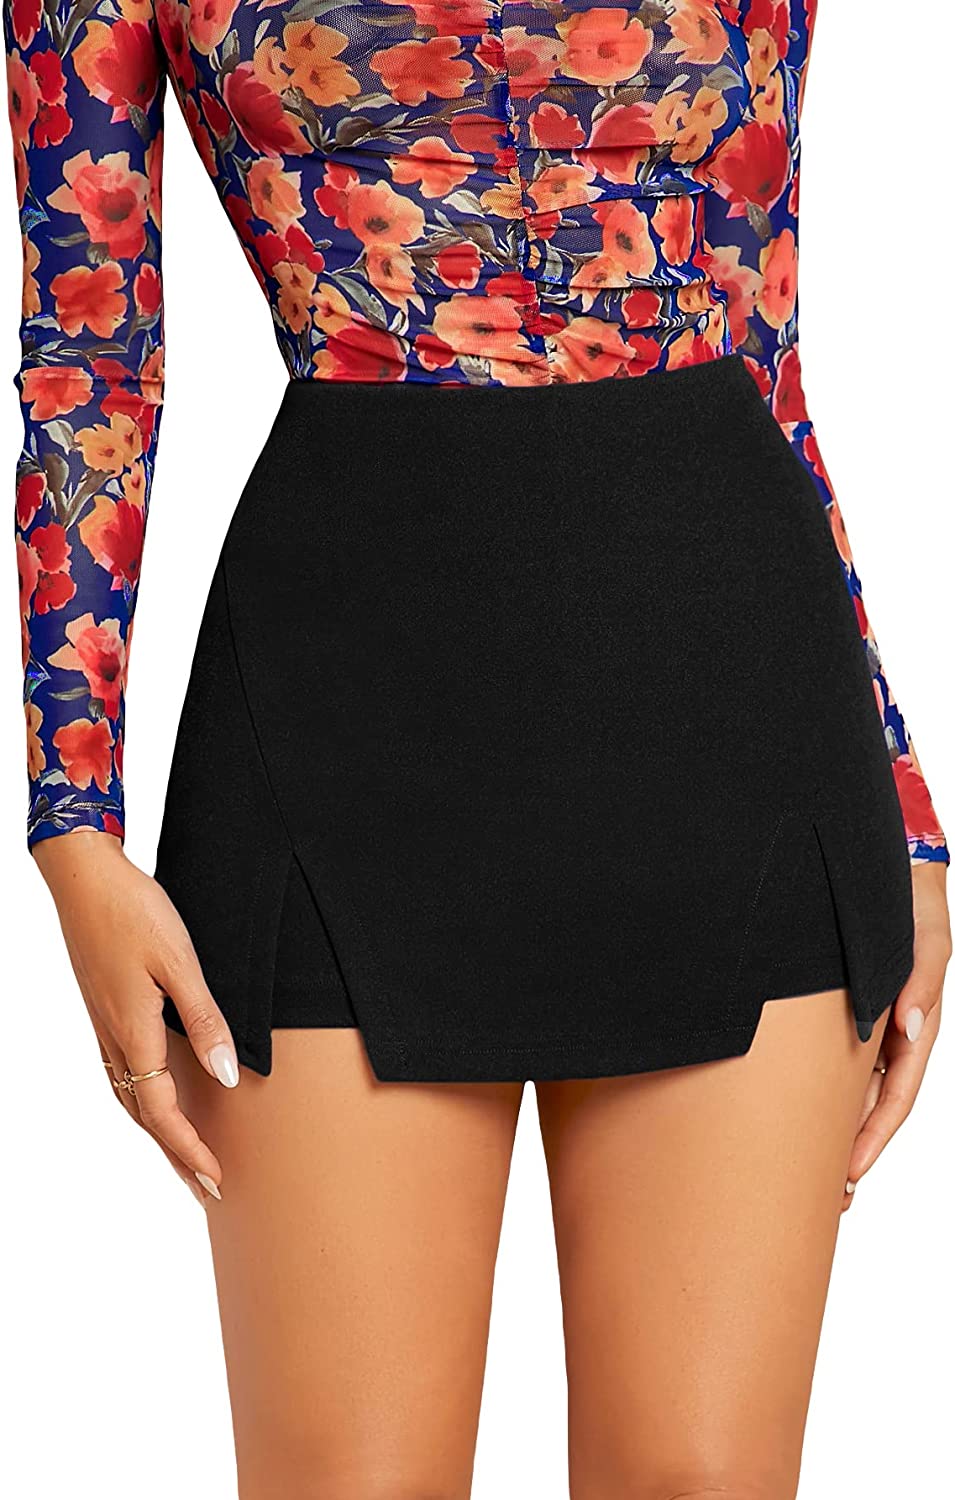 WDIRARA Women's High Waist Split Hem Skort Zip Back Plain Skirt Shorts